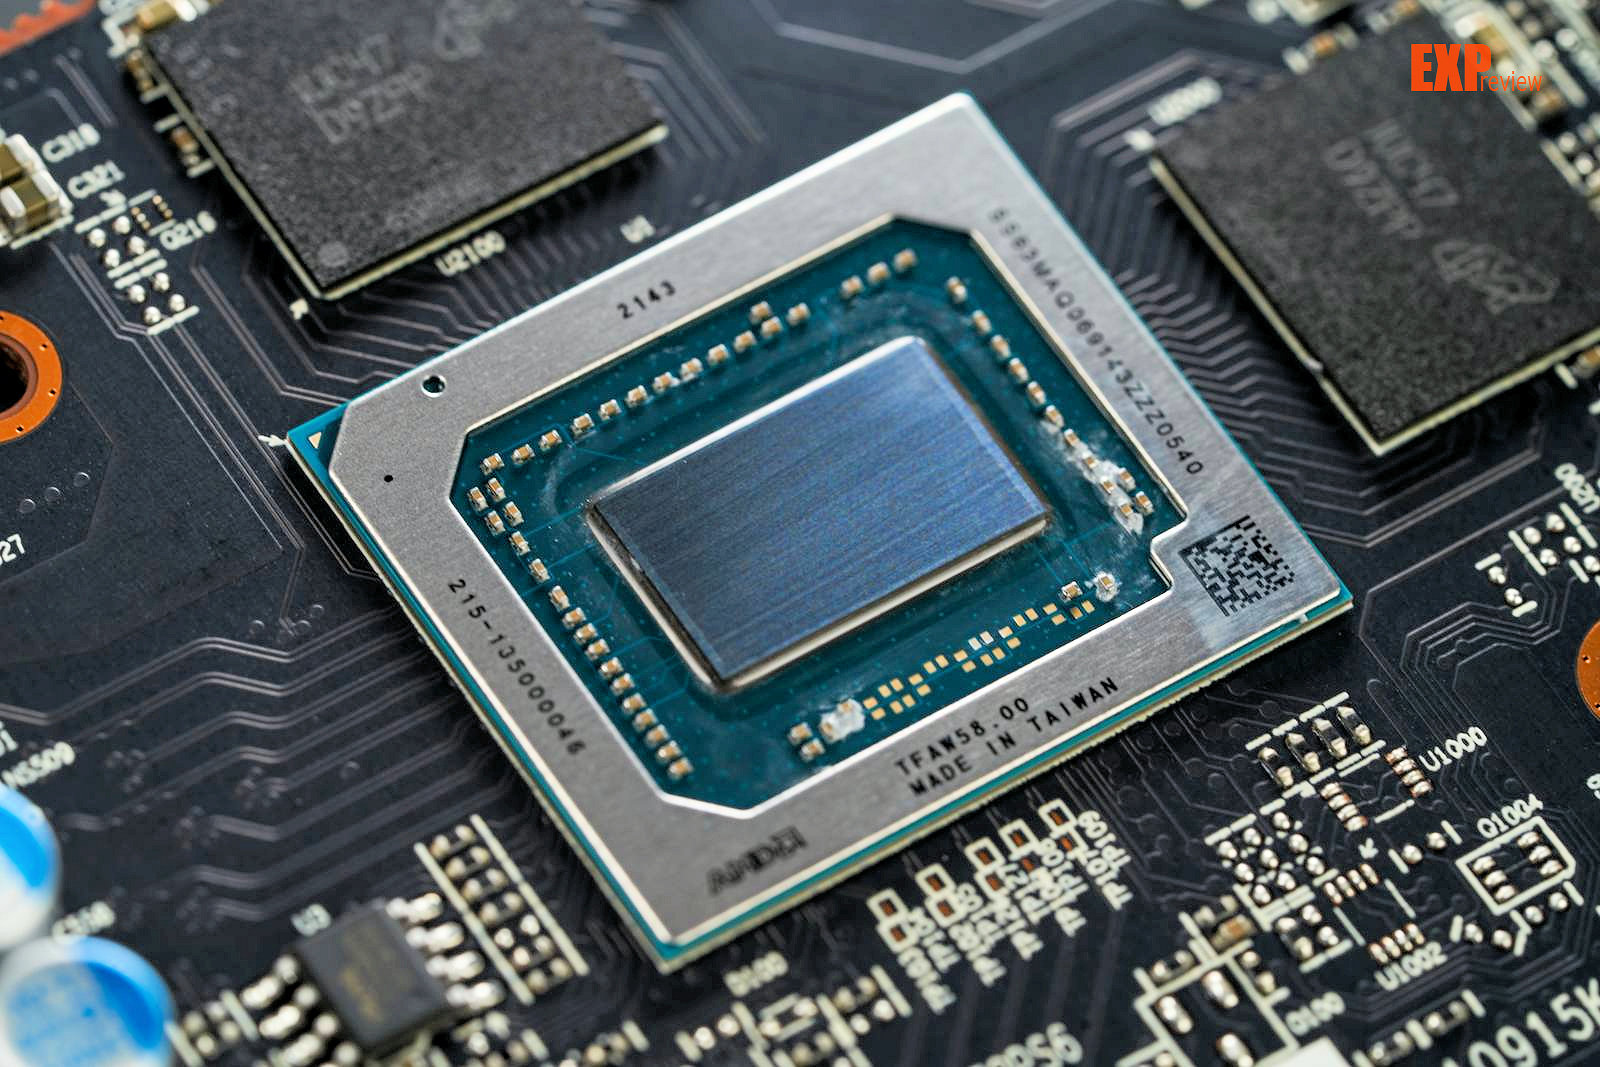 AMD Radeon RX 6400